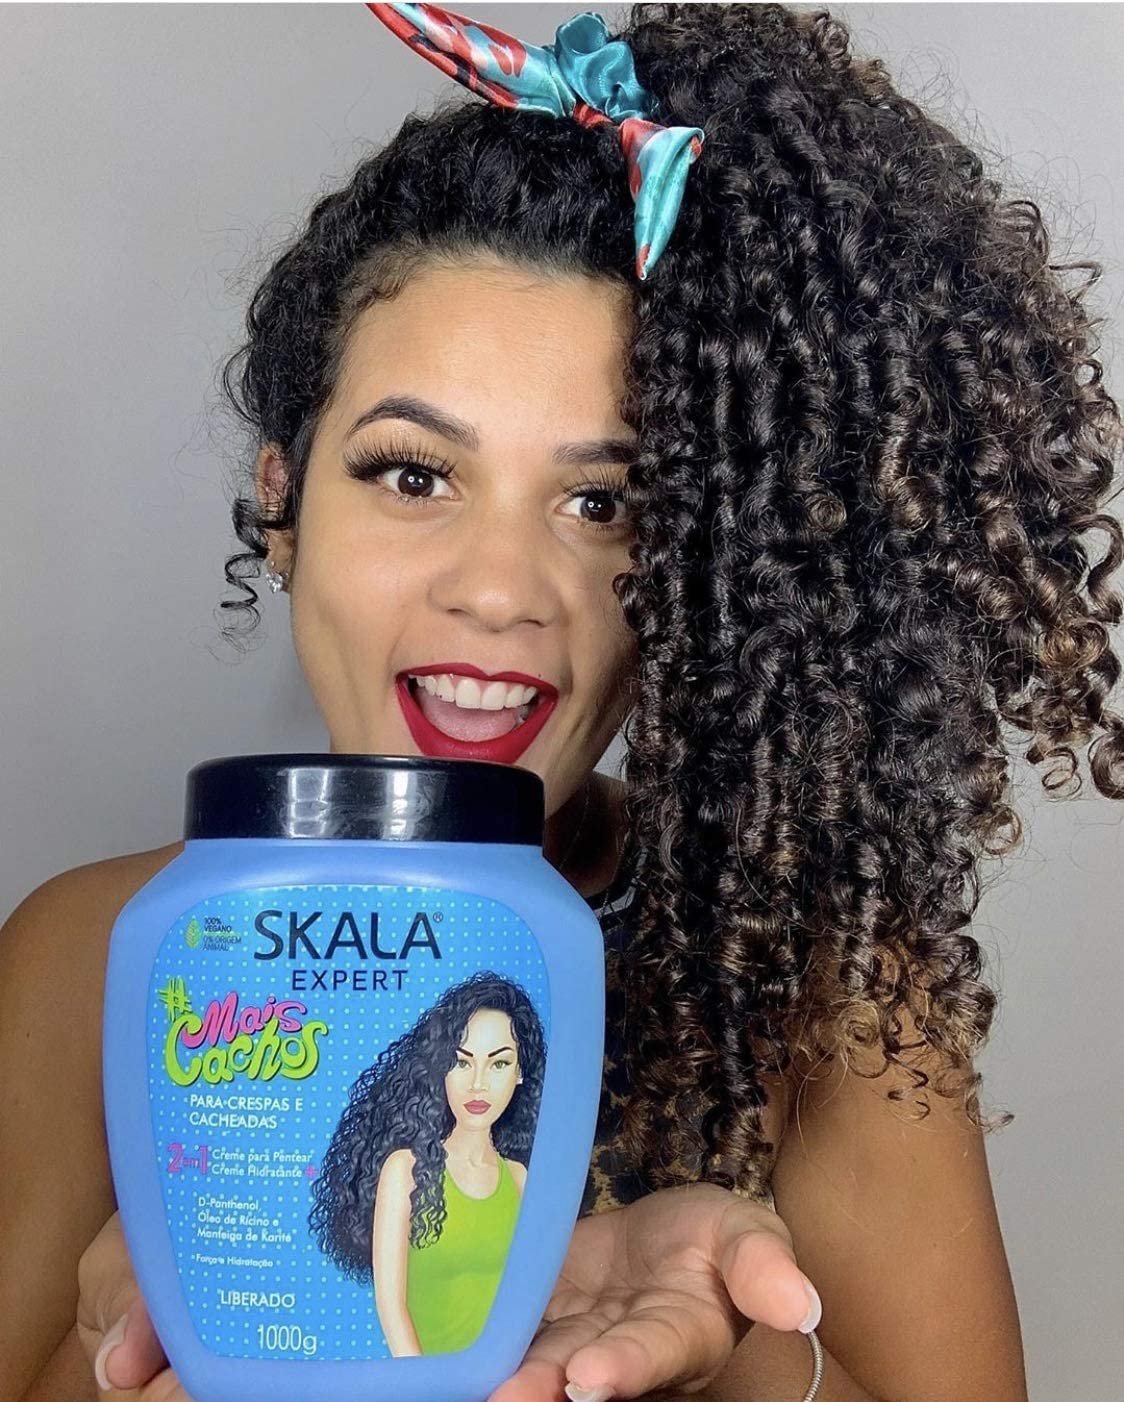 SKALA Hair Care Duo: Expert Mais Cachos 2-in-1 Conditioning Treatment Cream + Brasil Passion Fruit & Pataua Oil Treatment Cream | Nourish, Strengthen, and Transform Your Hair | Each Bottle 1000g/1kg - 35.27 Oz